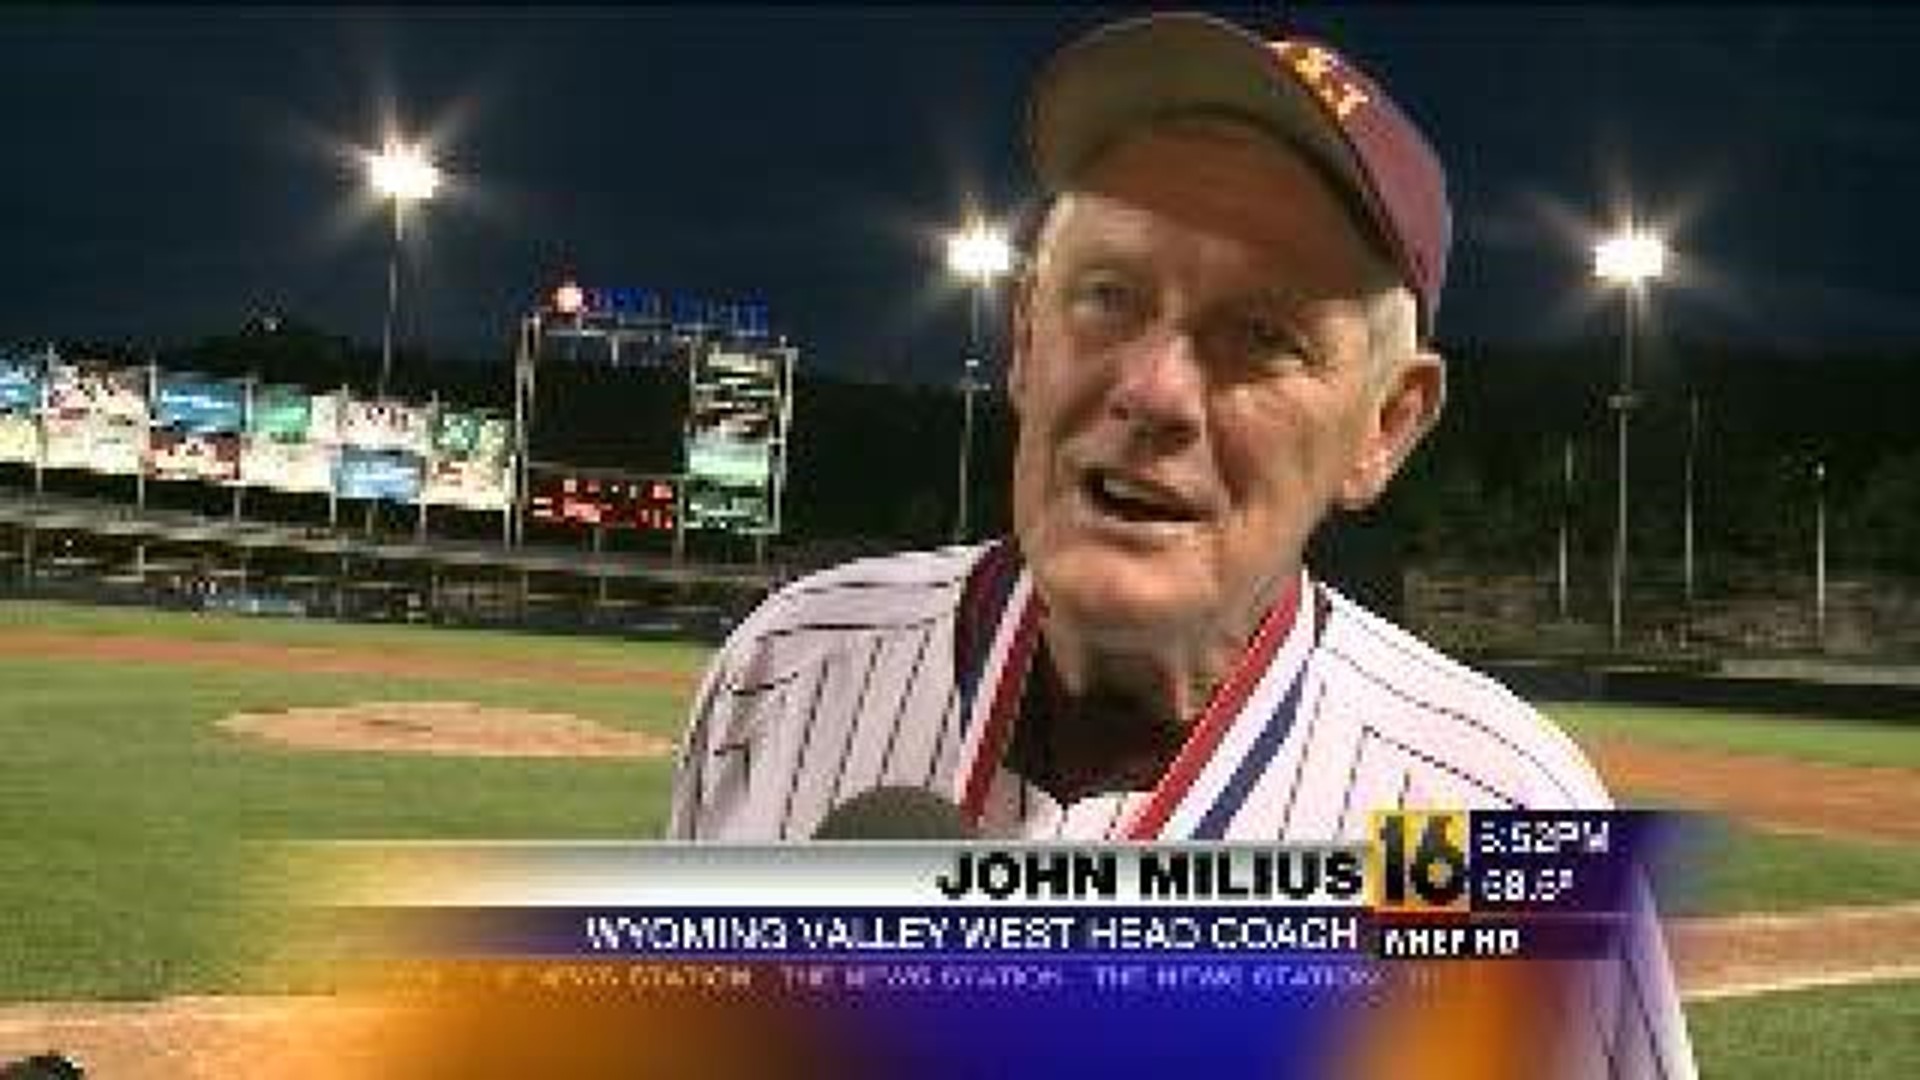 John Milius speaks about WVC baseball